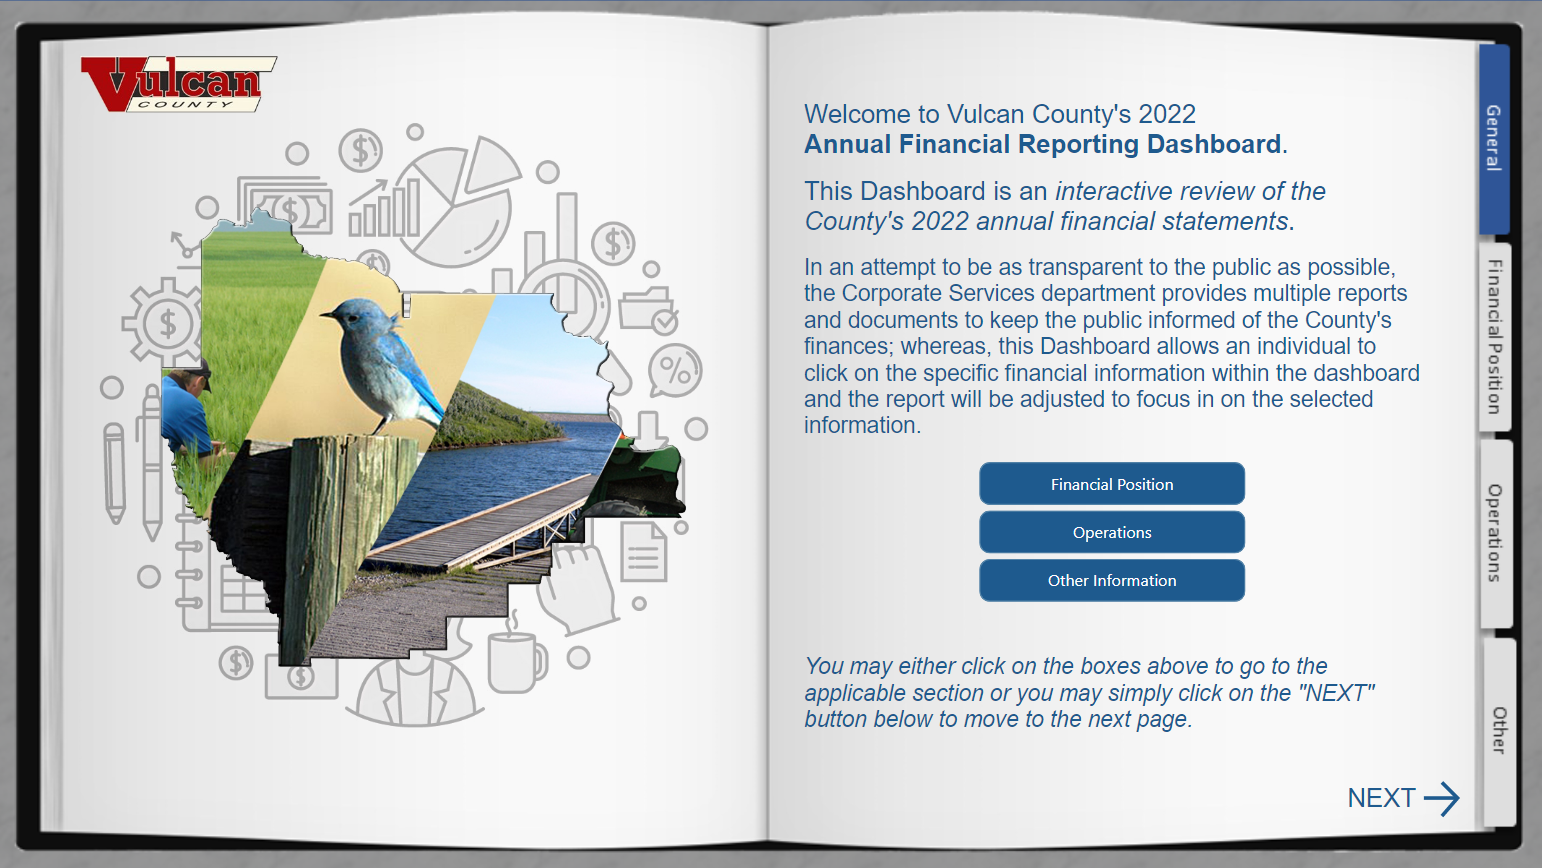 2022 Annual Financial Reporting Dashboard